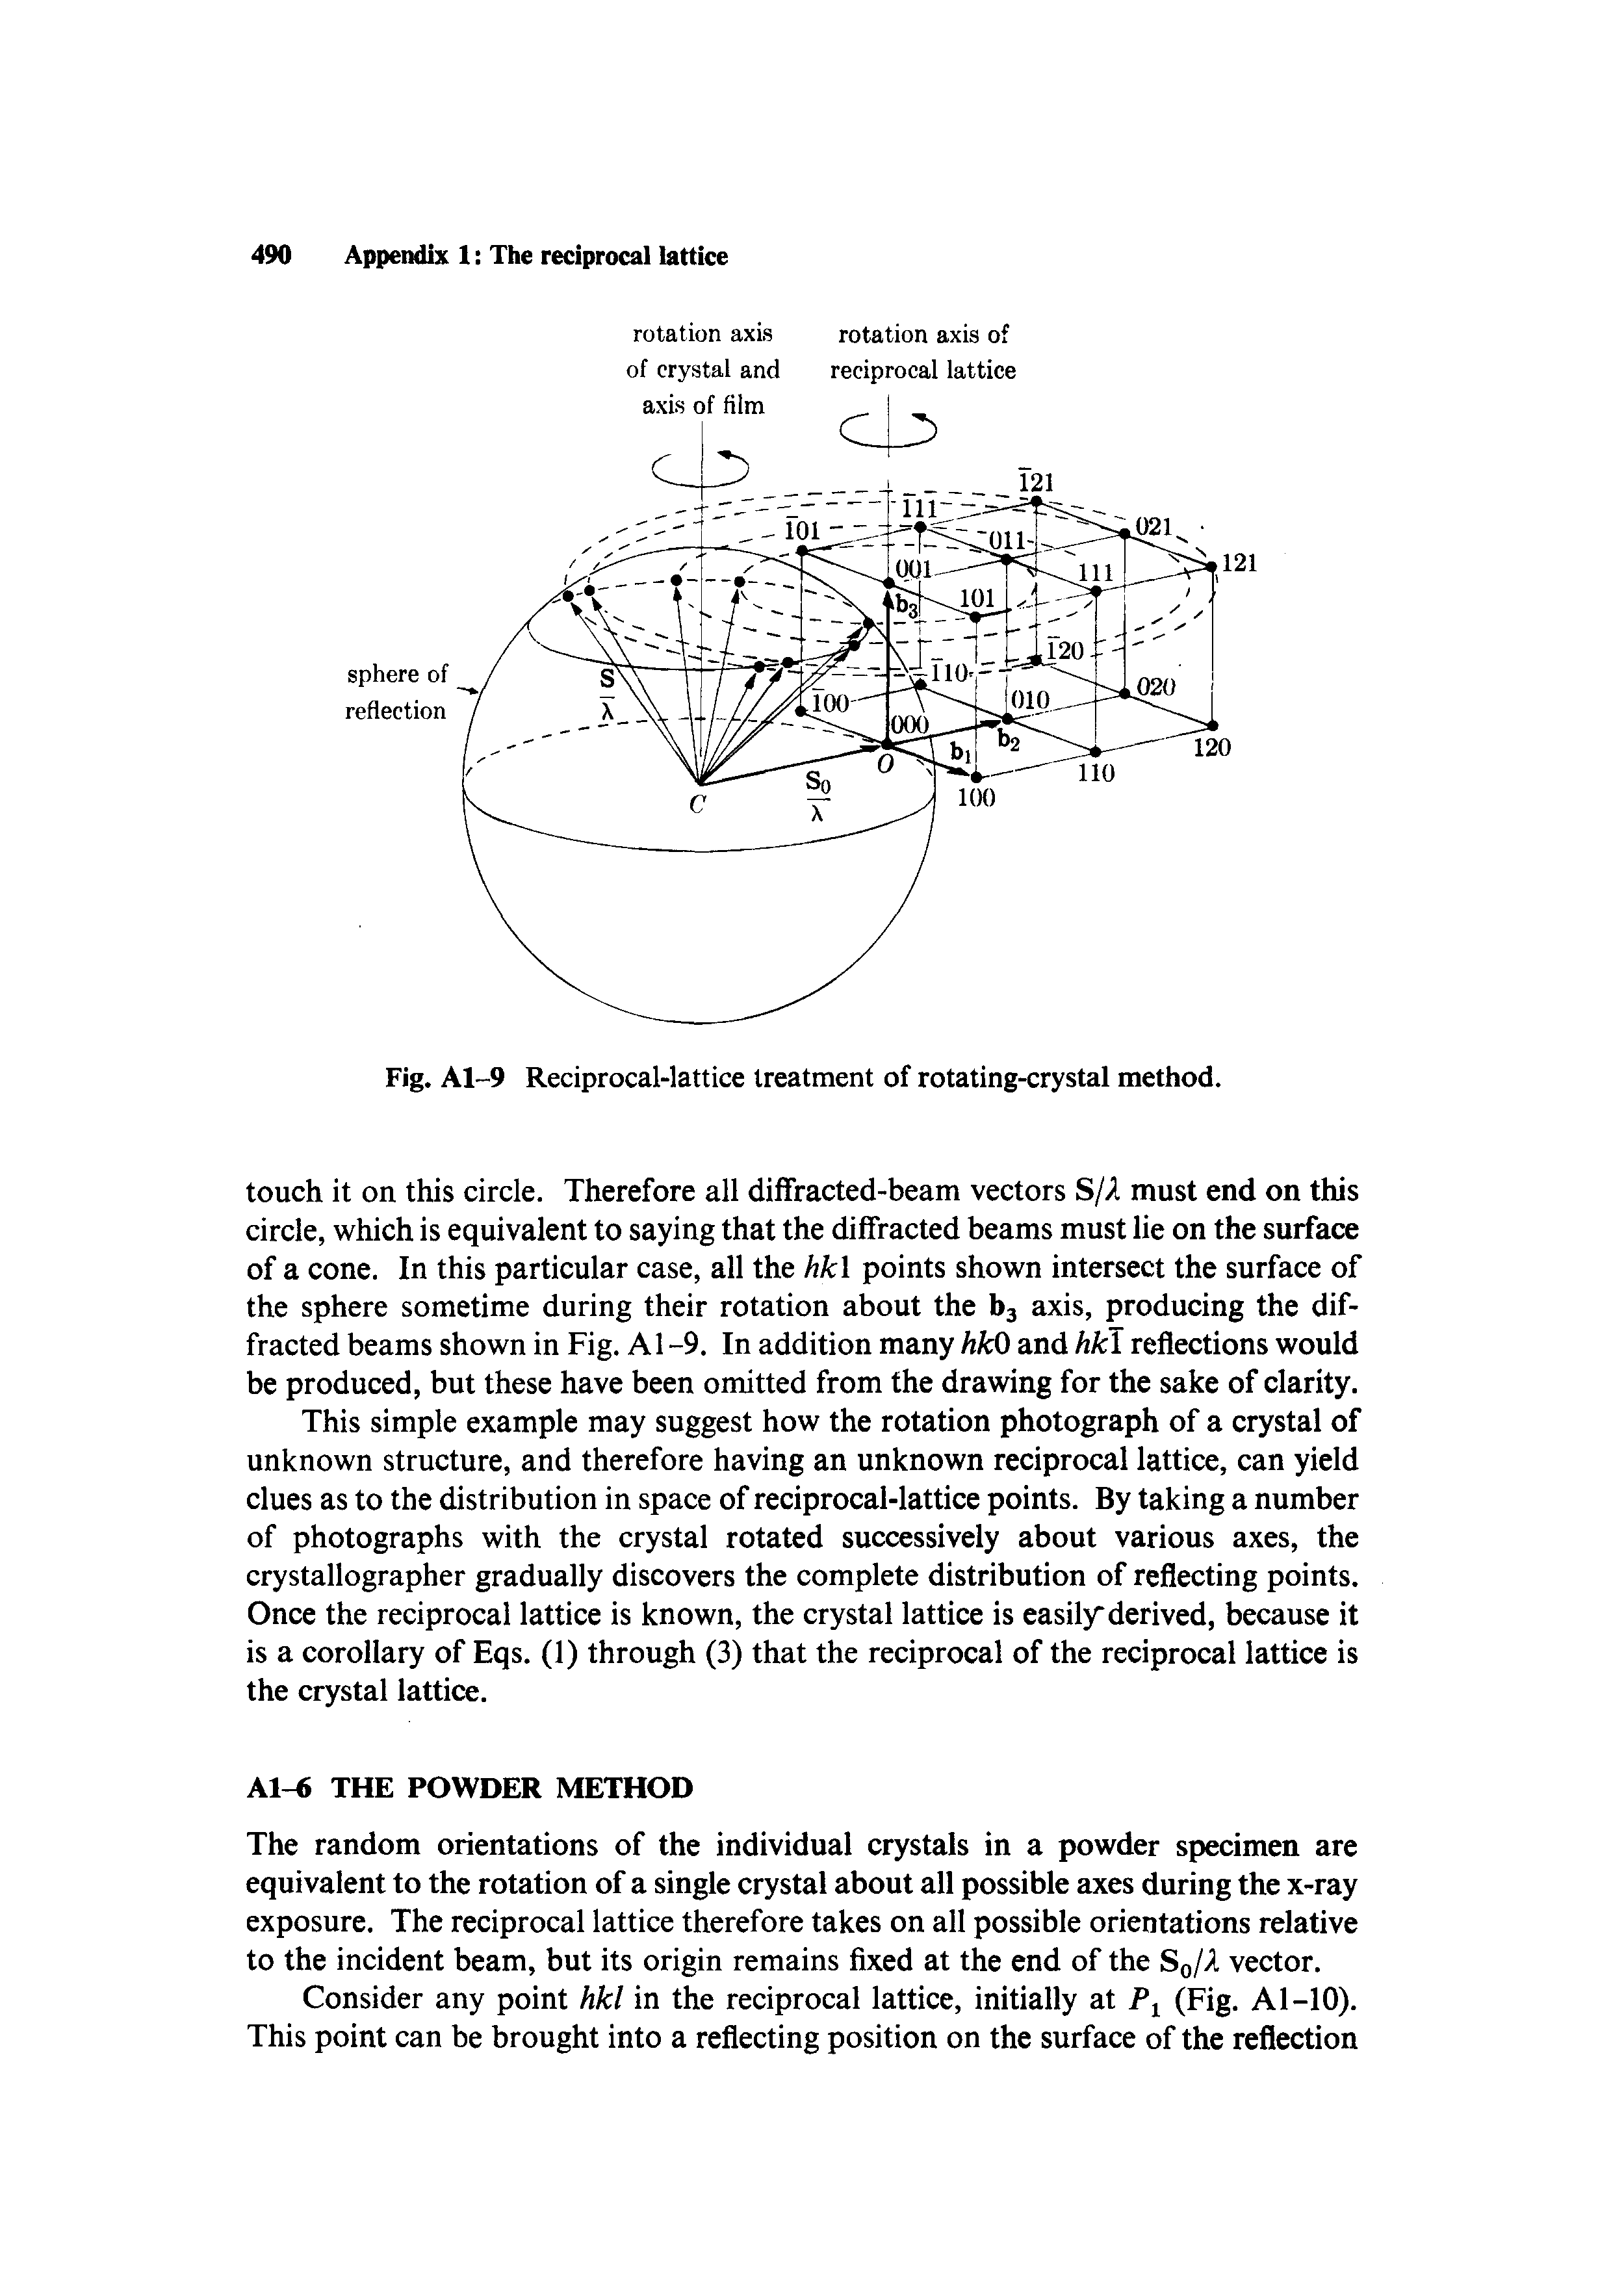 Fig. Al-9 Reciprocal-lattice treatment of rotating-crystal method.